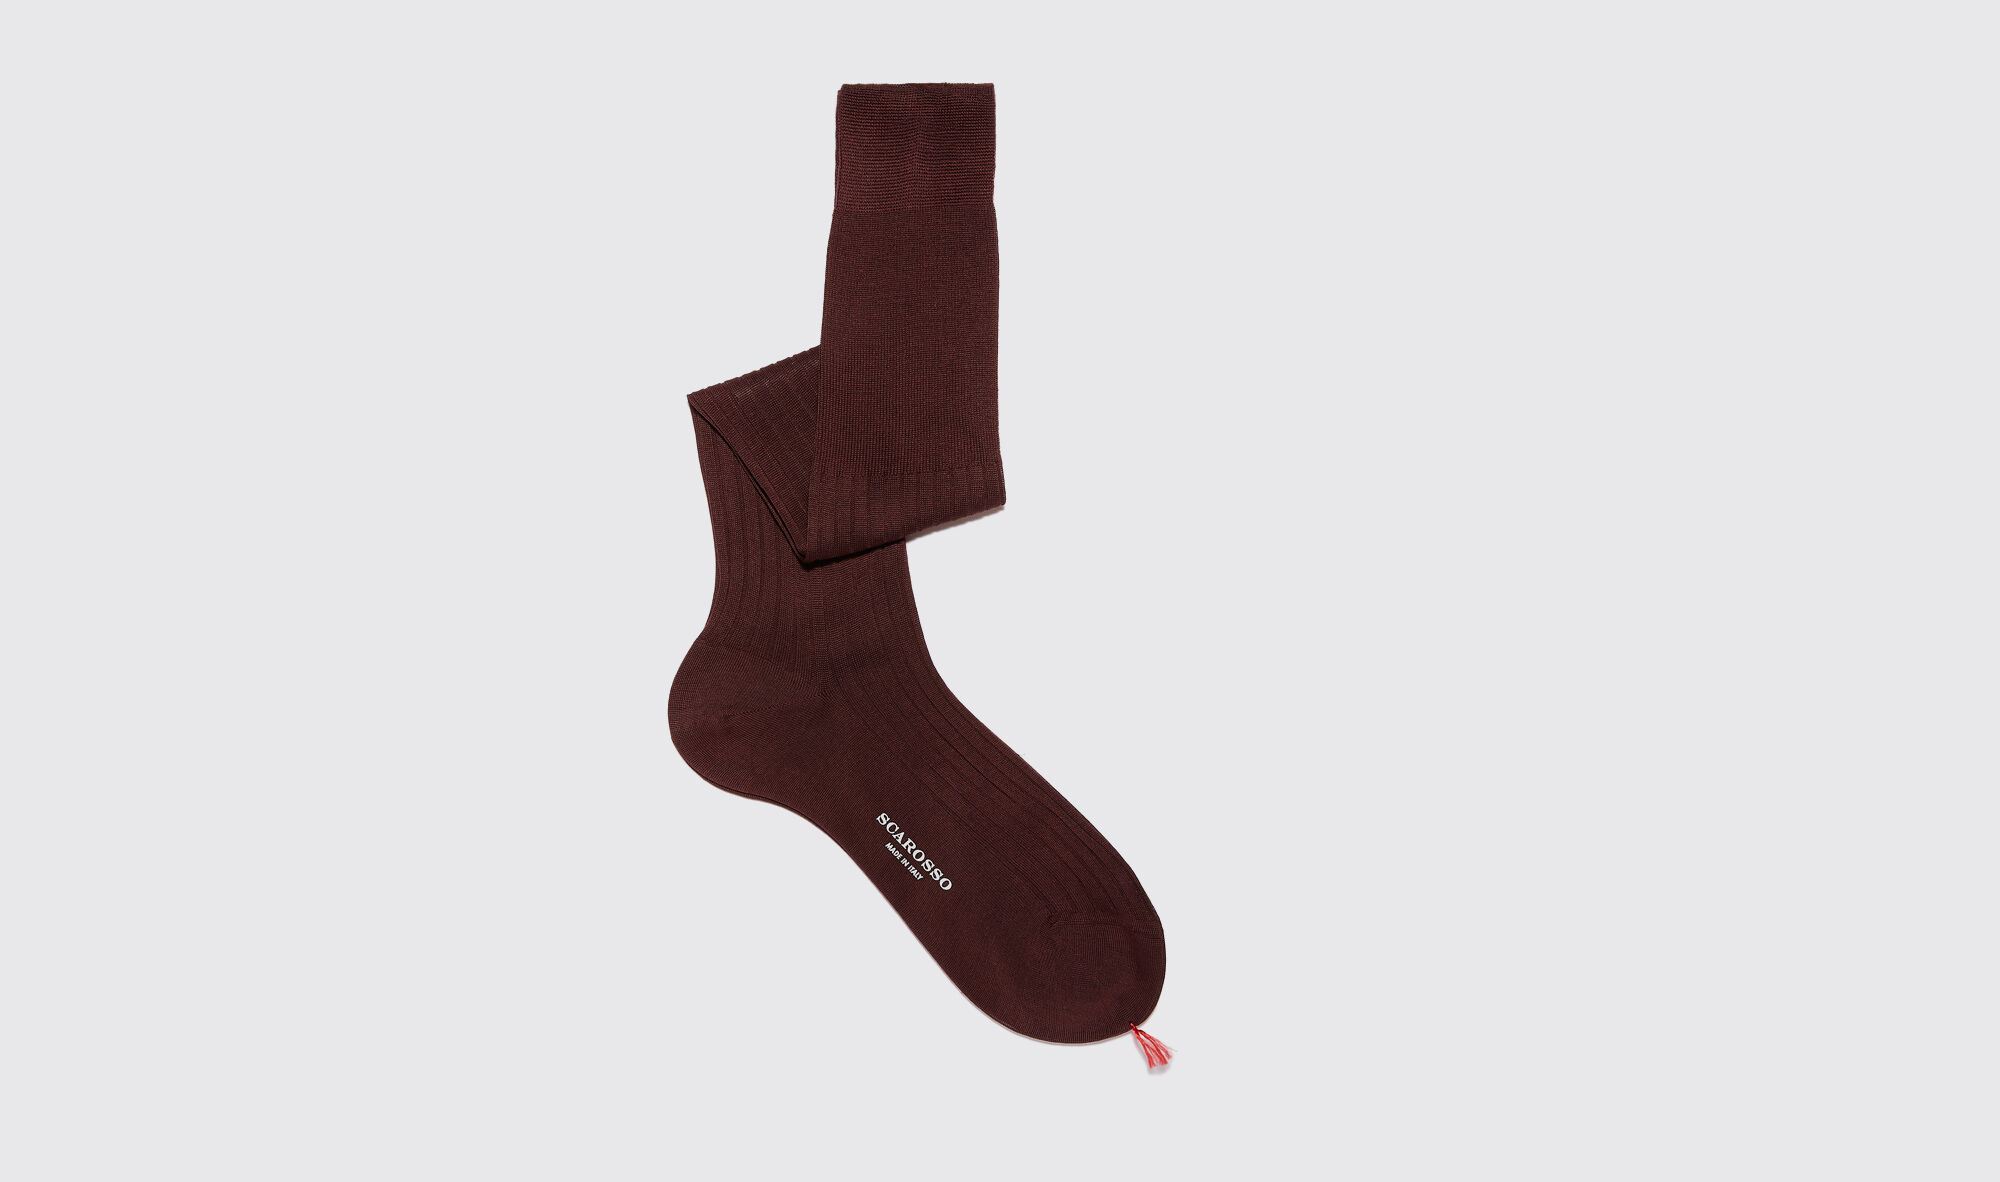 Scarosso Burgundy Cotton Knee Socks - Uomo Prima Che Finiscano Borgogna - Cotone 46-47